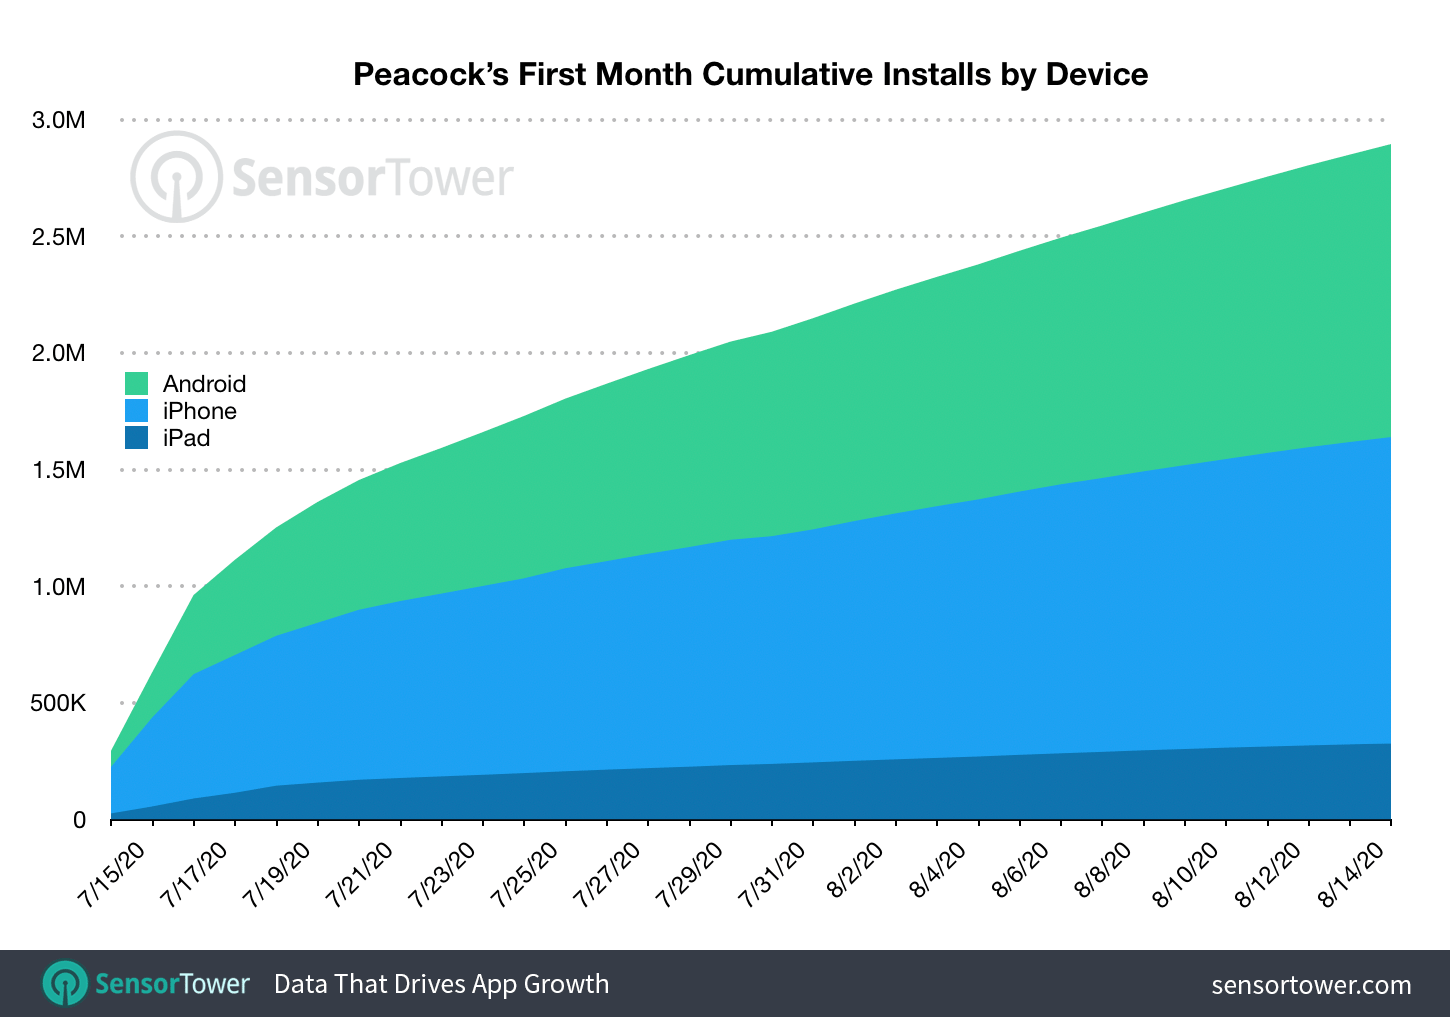 Peacock's cumulative installs by platform